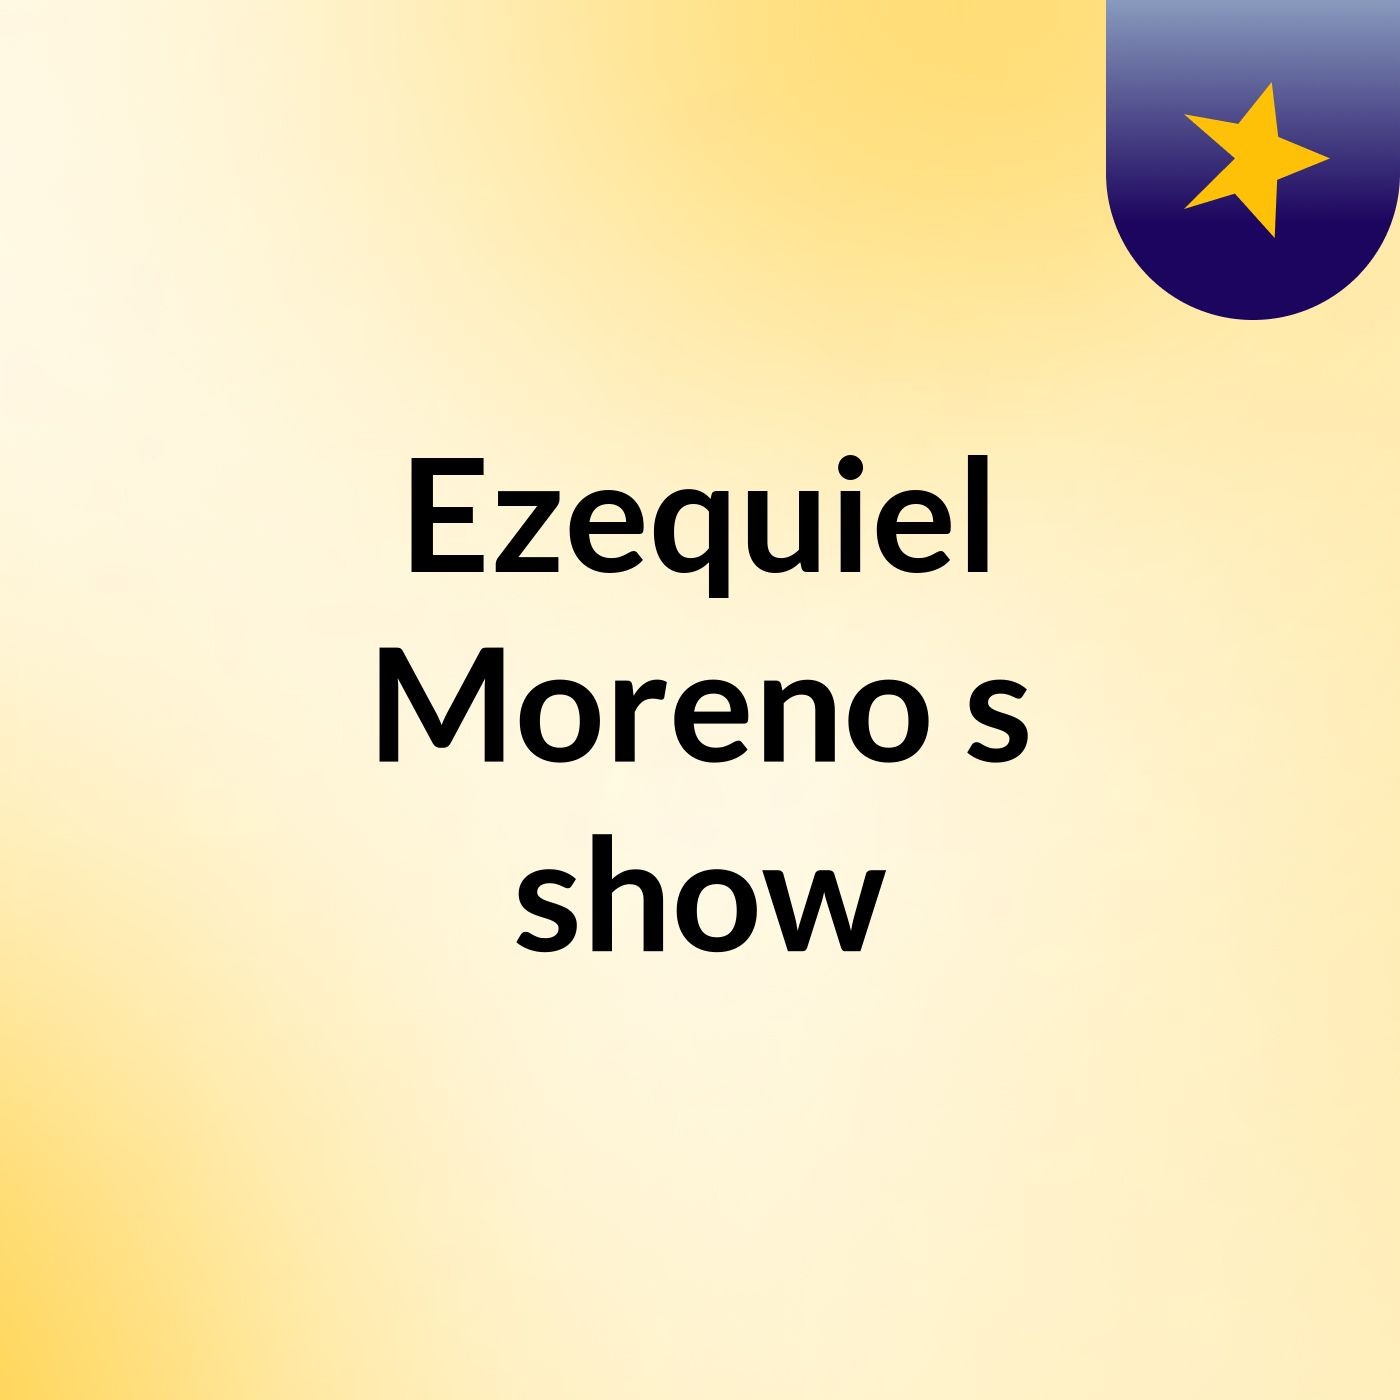 Ezequiel Moreno's show